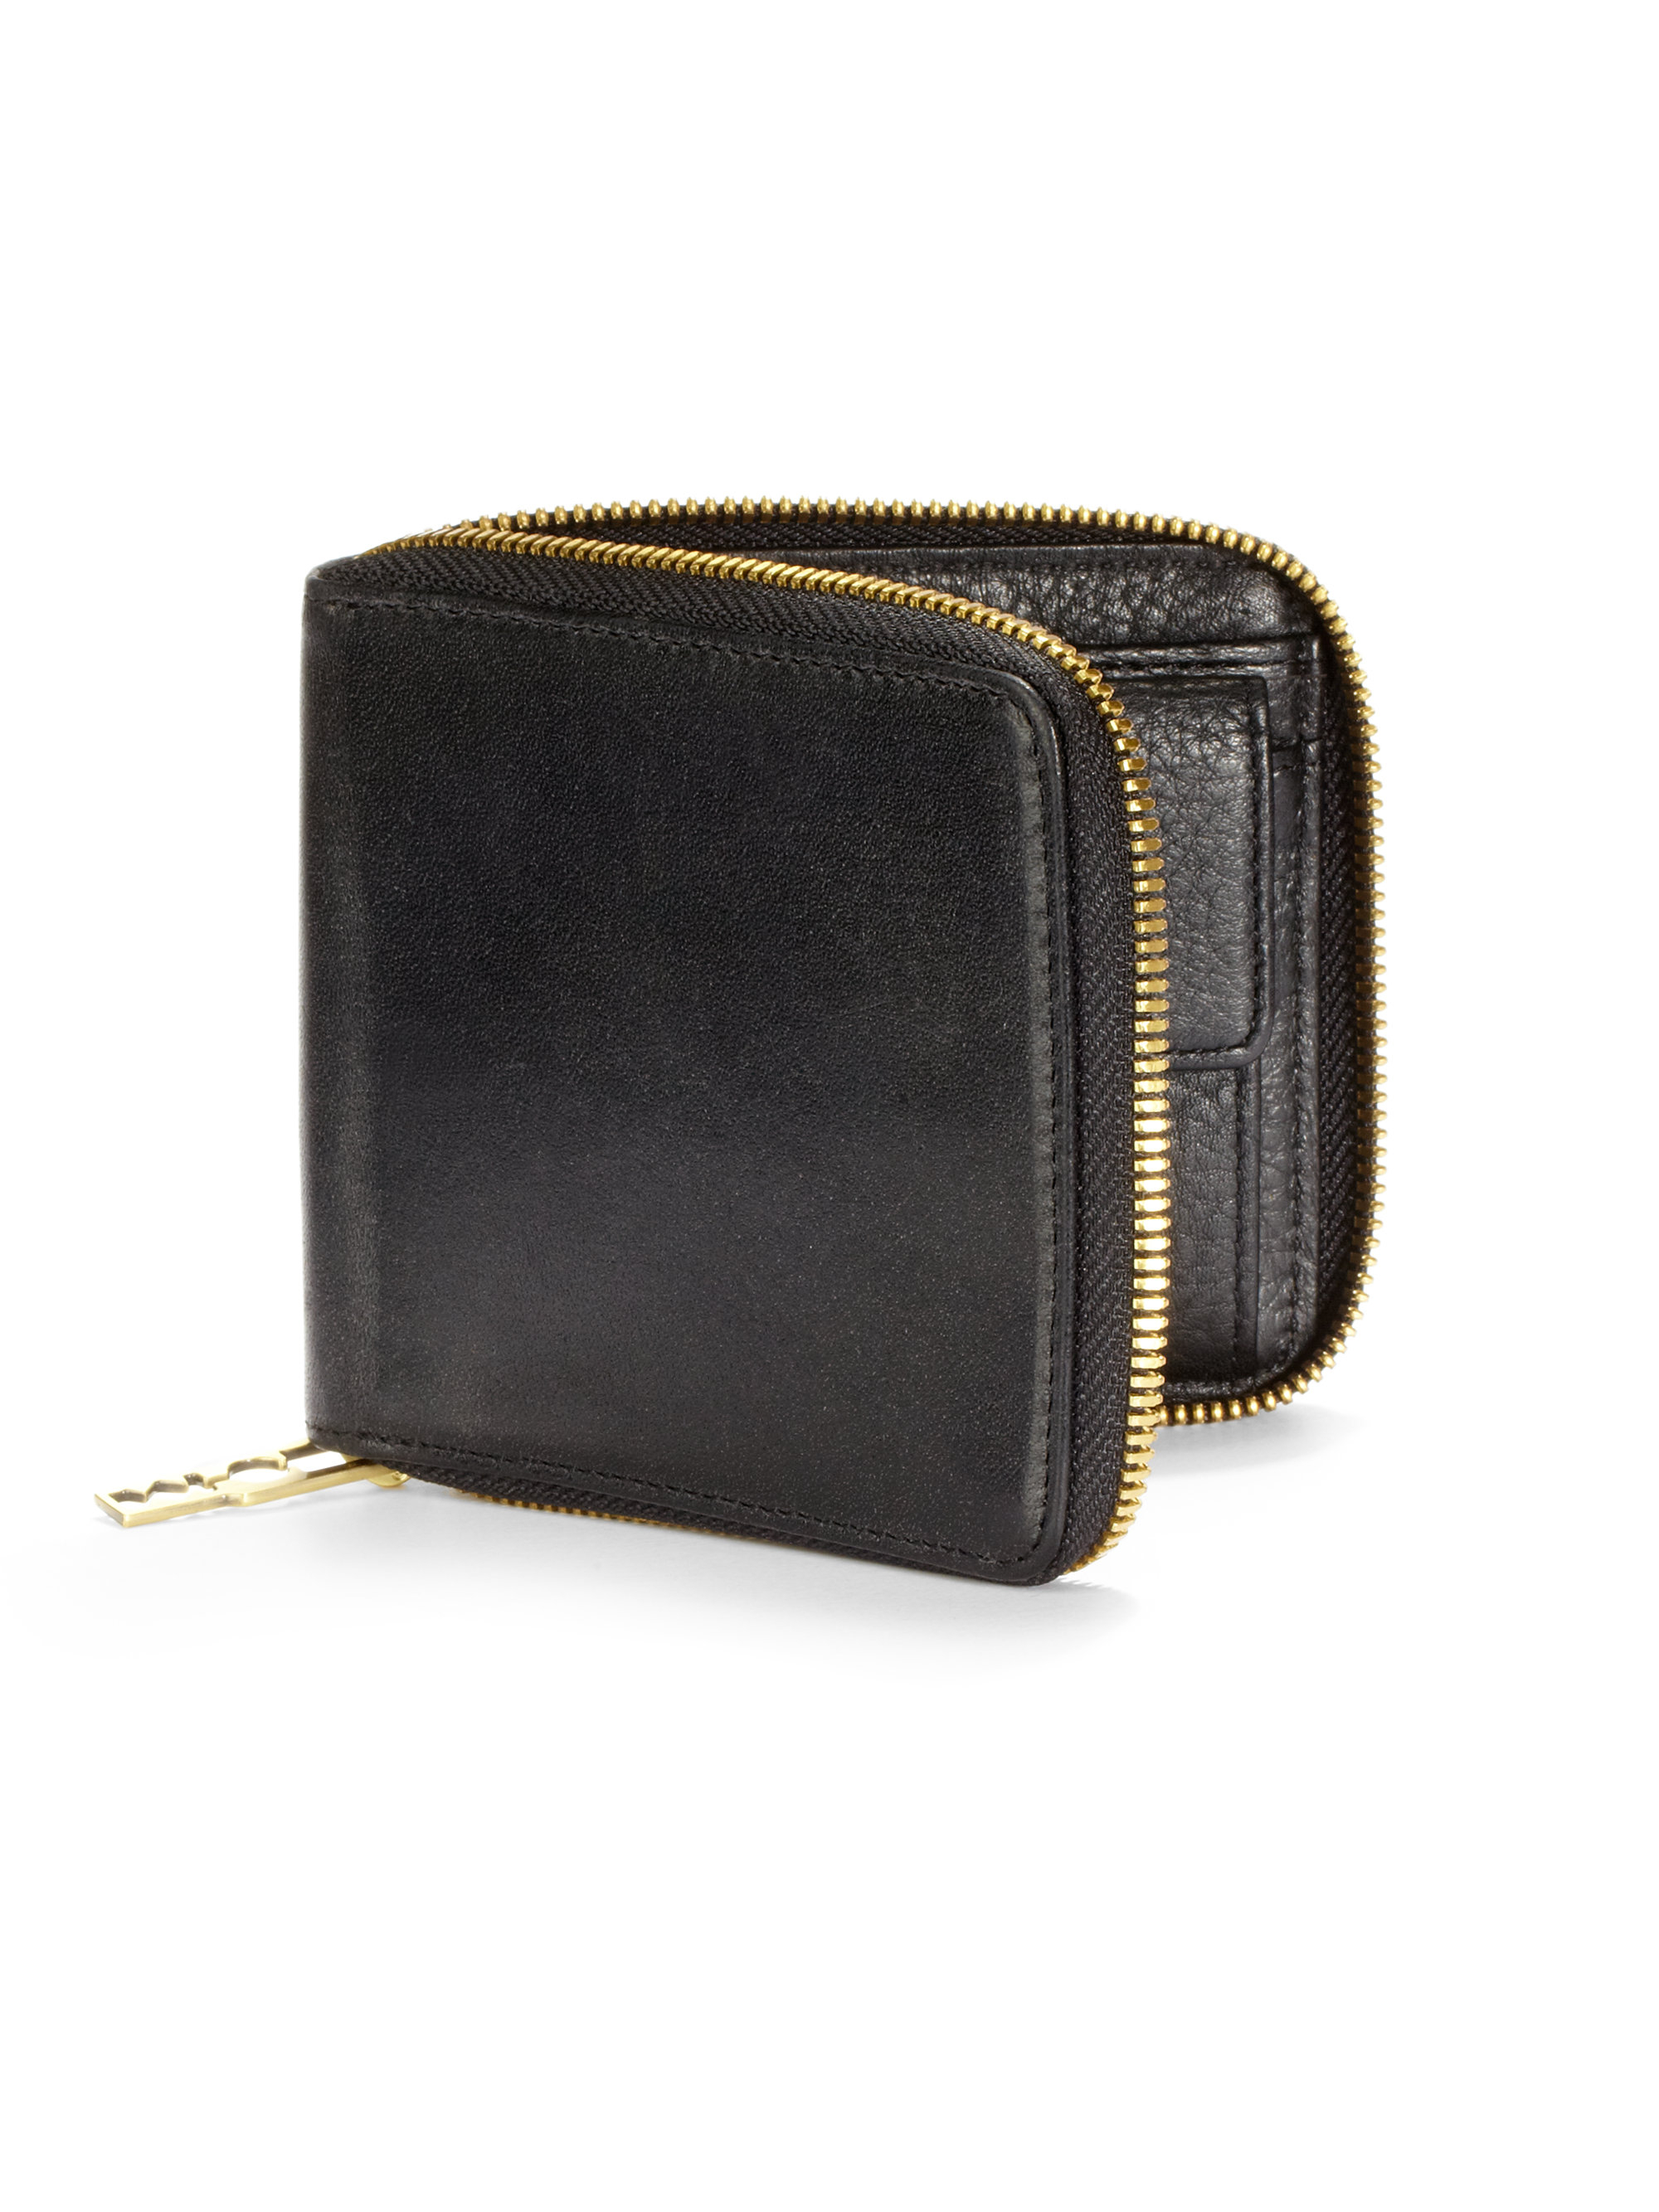 McQ Leather Zip Around Wallet in Black for Men - Lyst